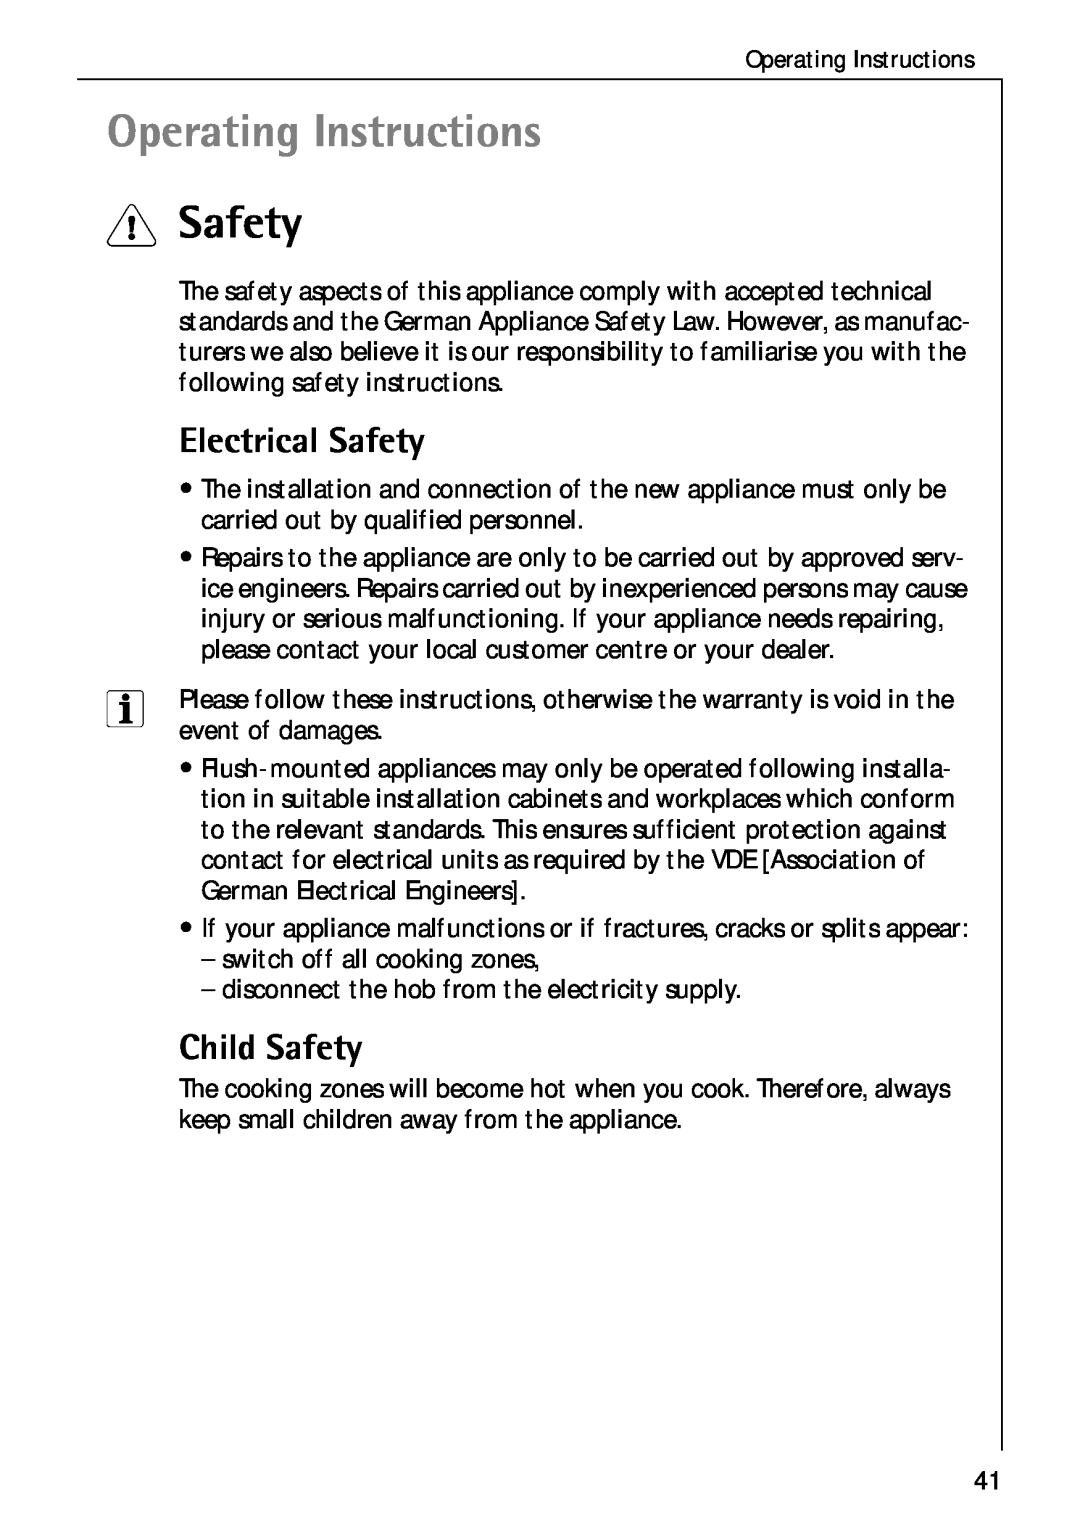 Electrolux C75301K operating instructions Operating Instructions, 1Safety, Electrical Safety, Child Safety 